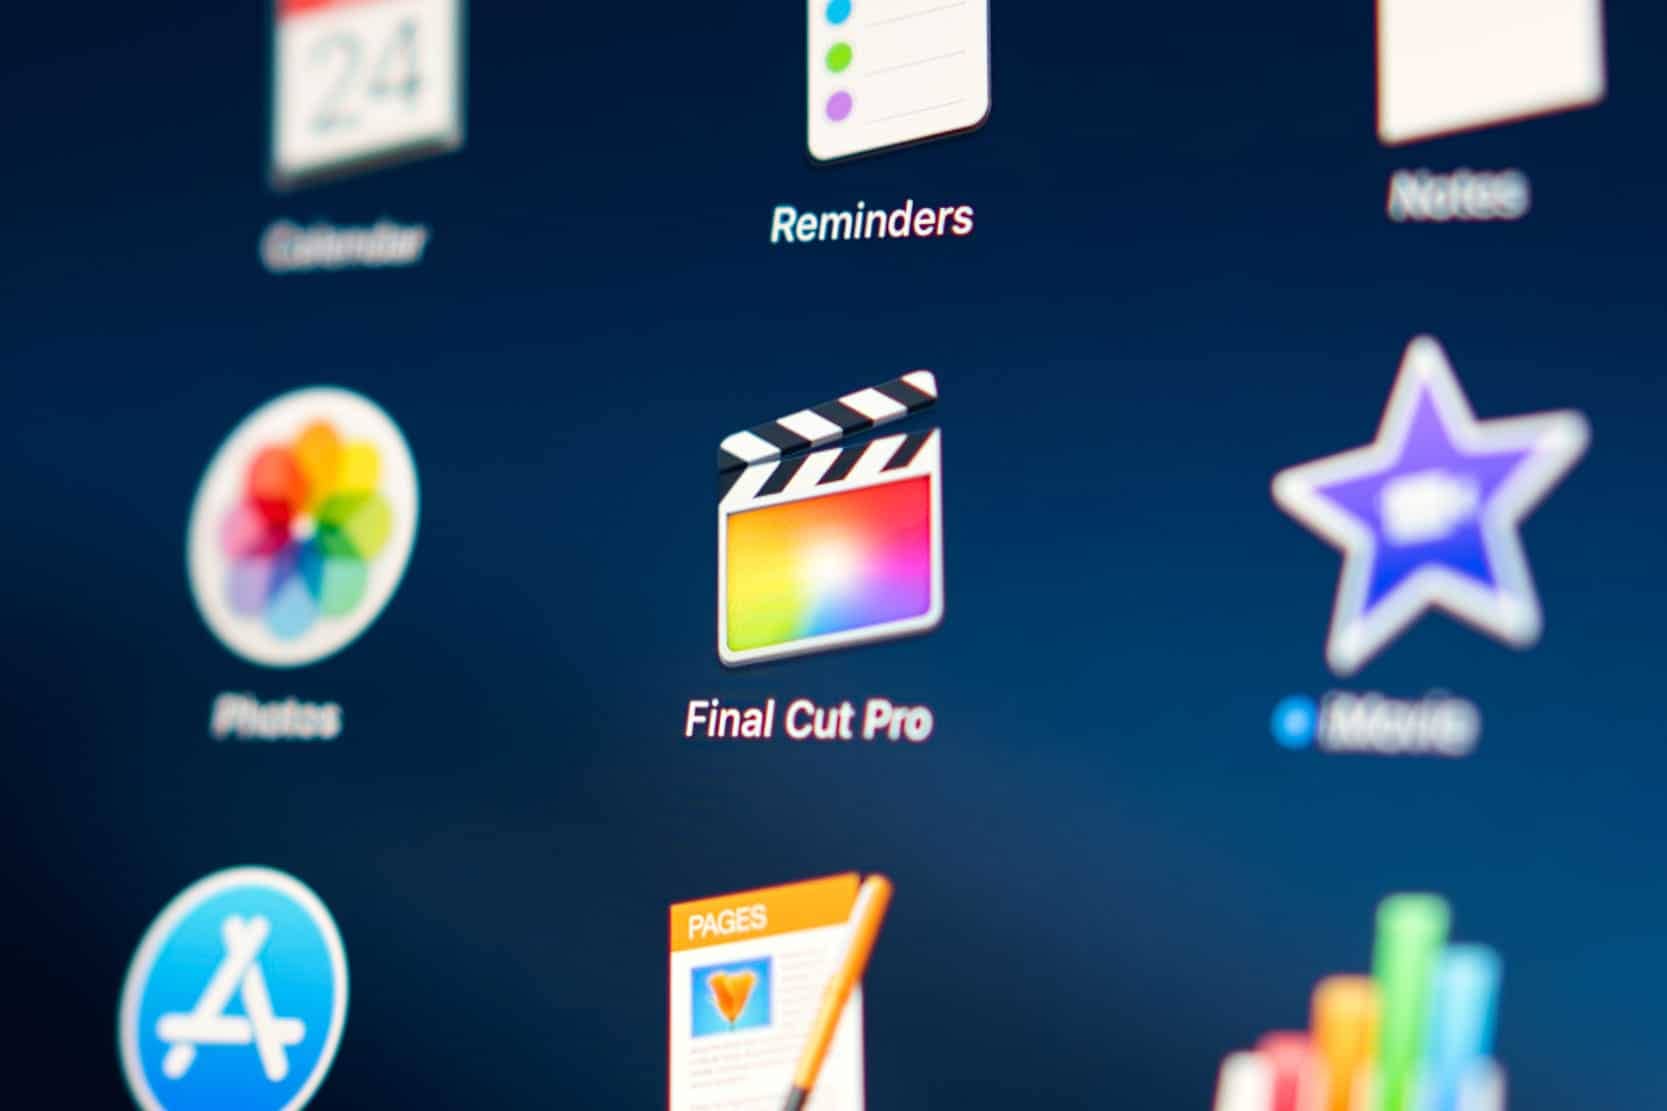 Final Cut Pro X app on Mac Dashboard